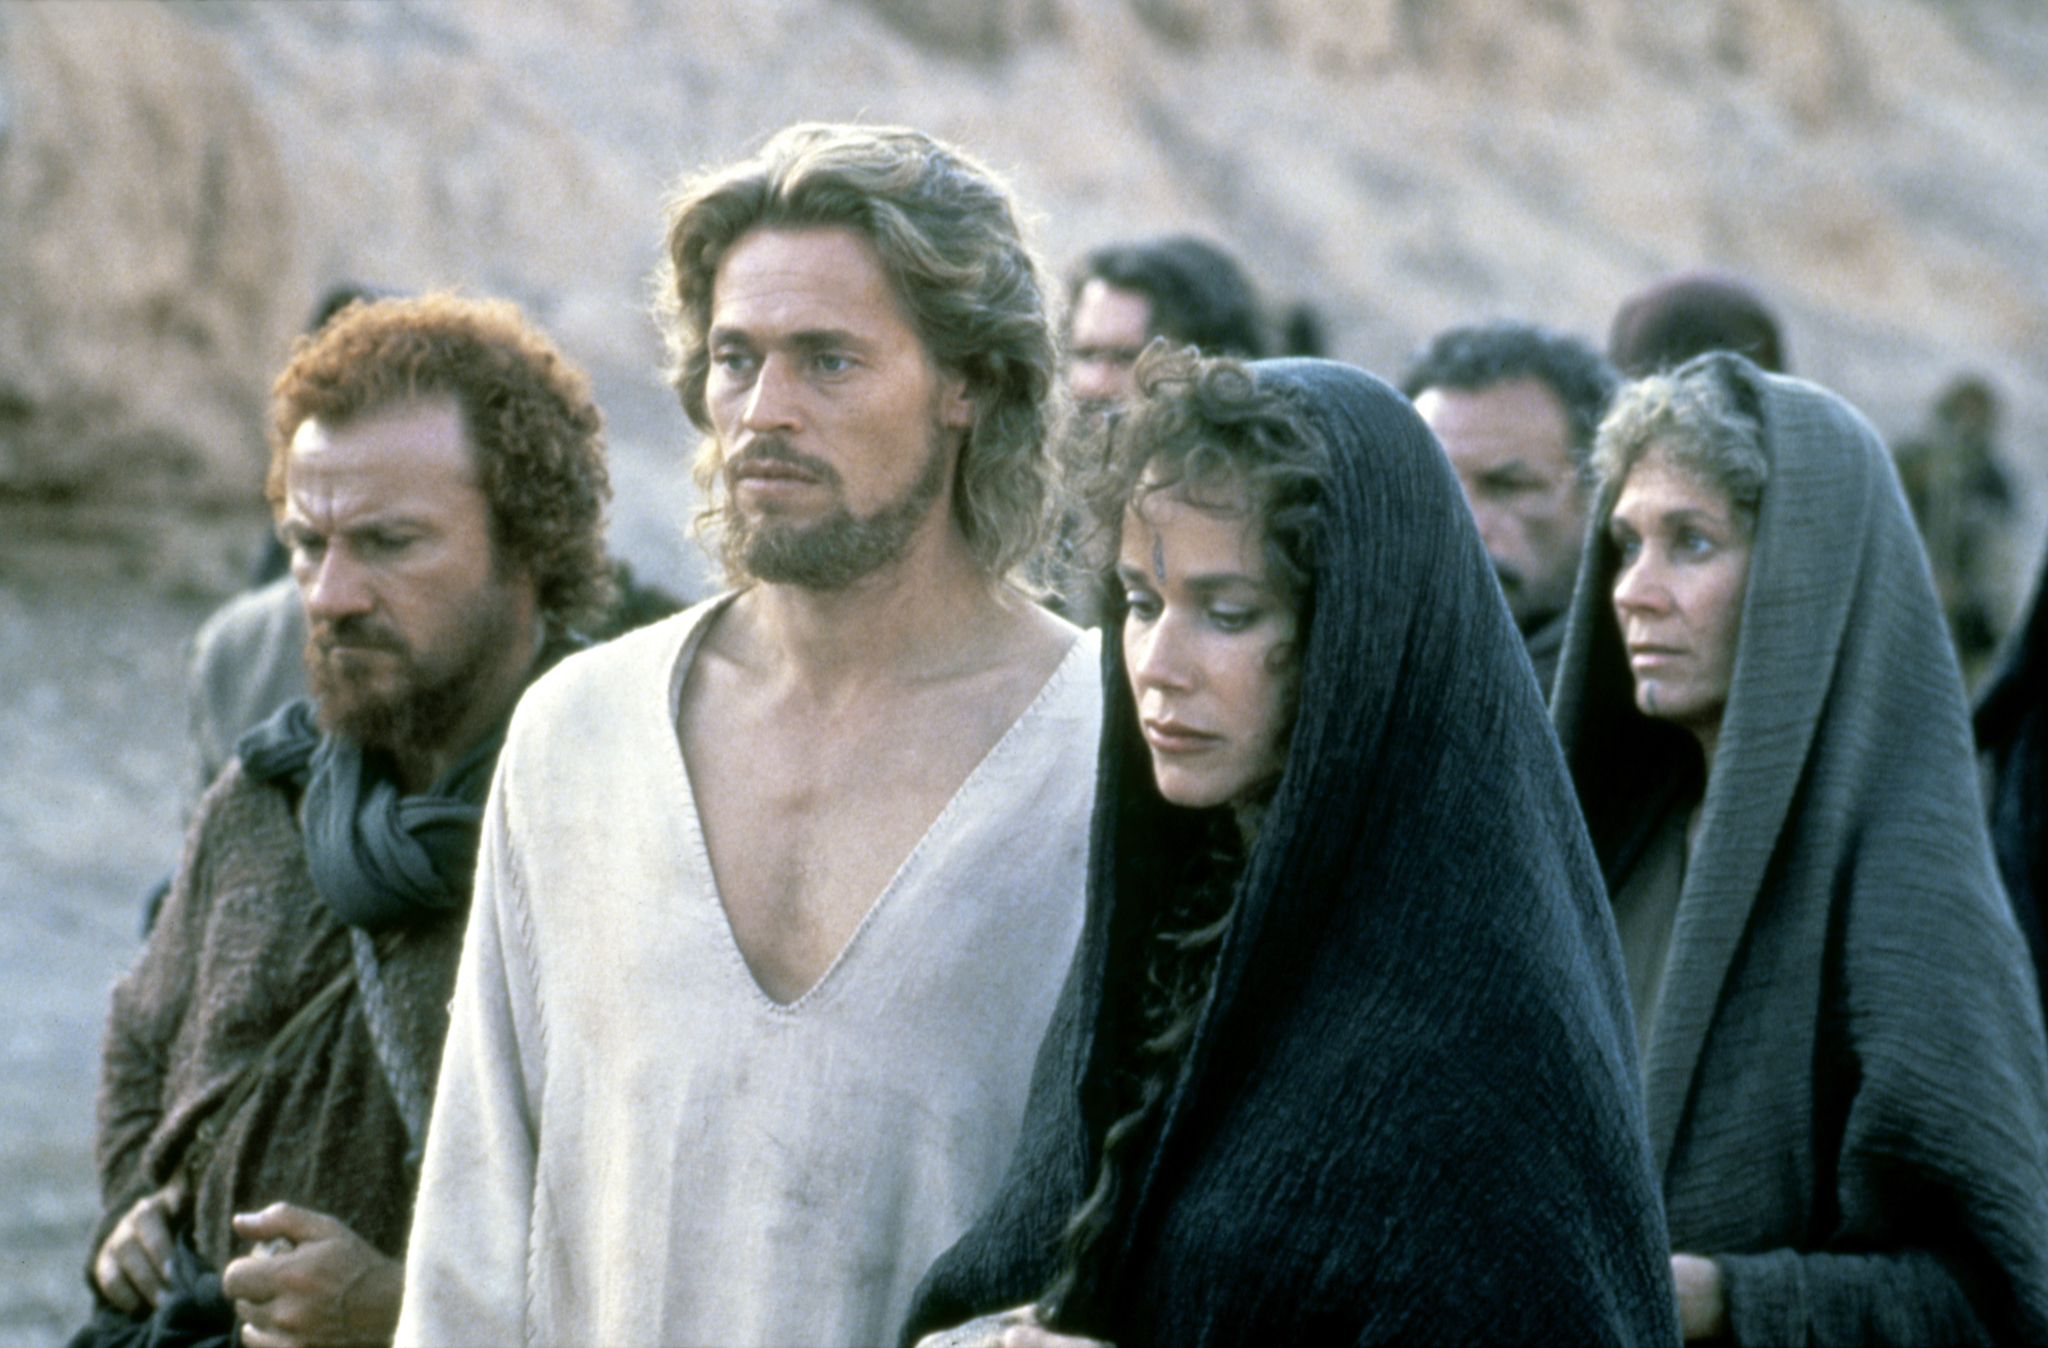  The Last Temptation of Christ (1988)